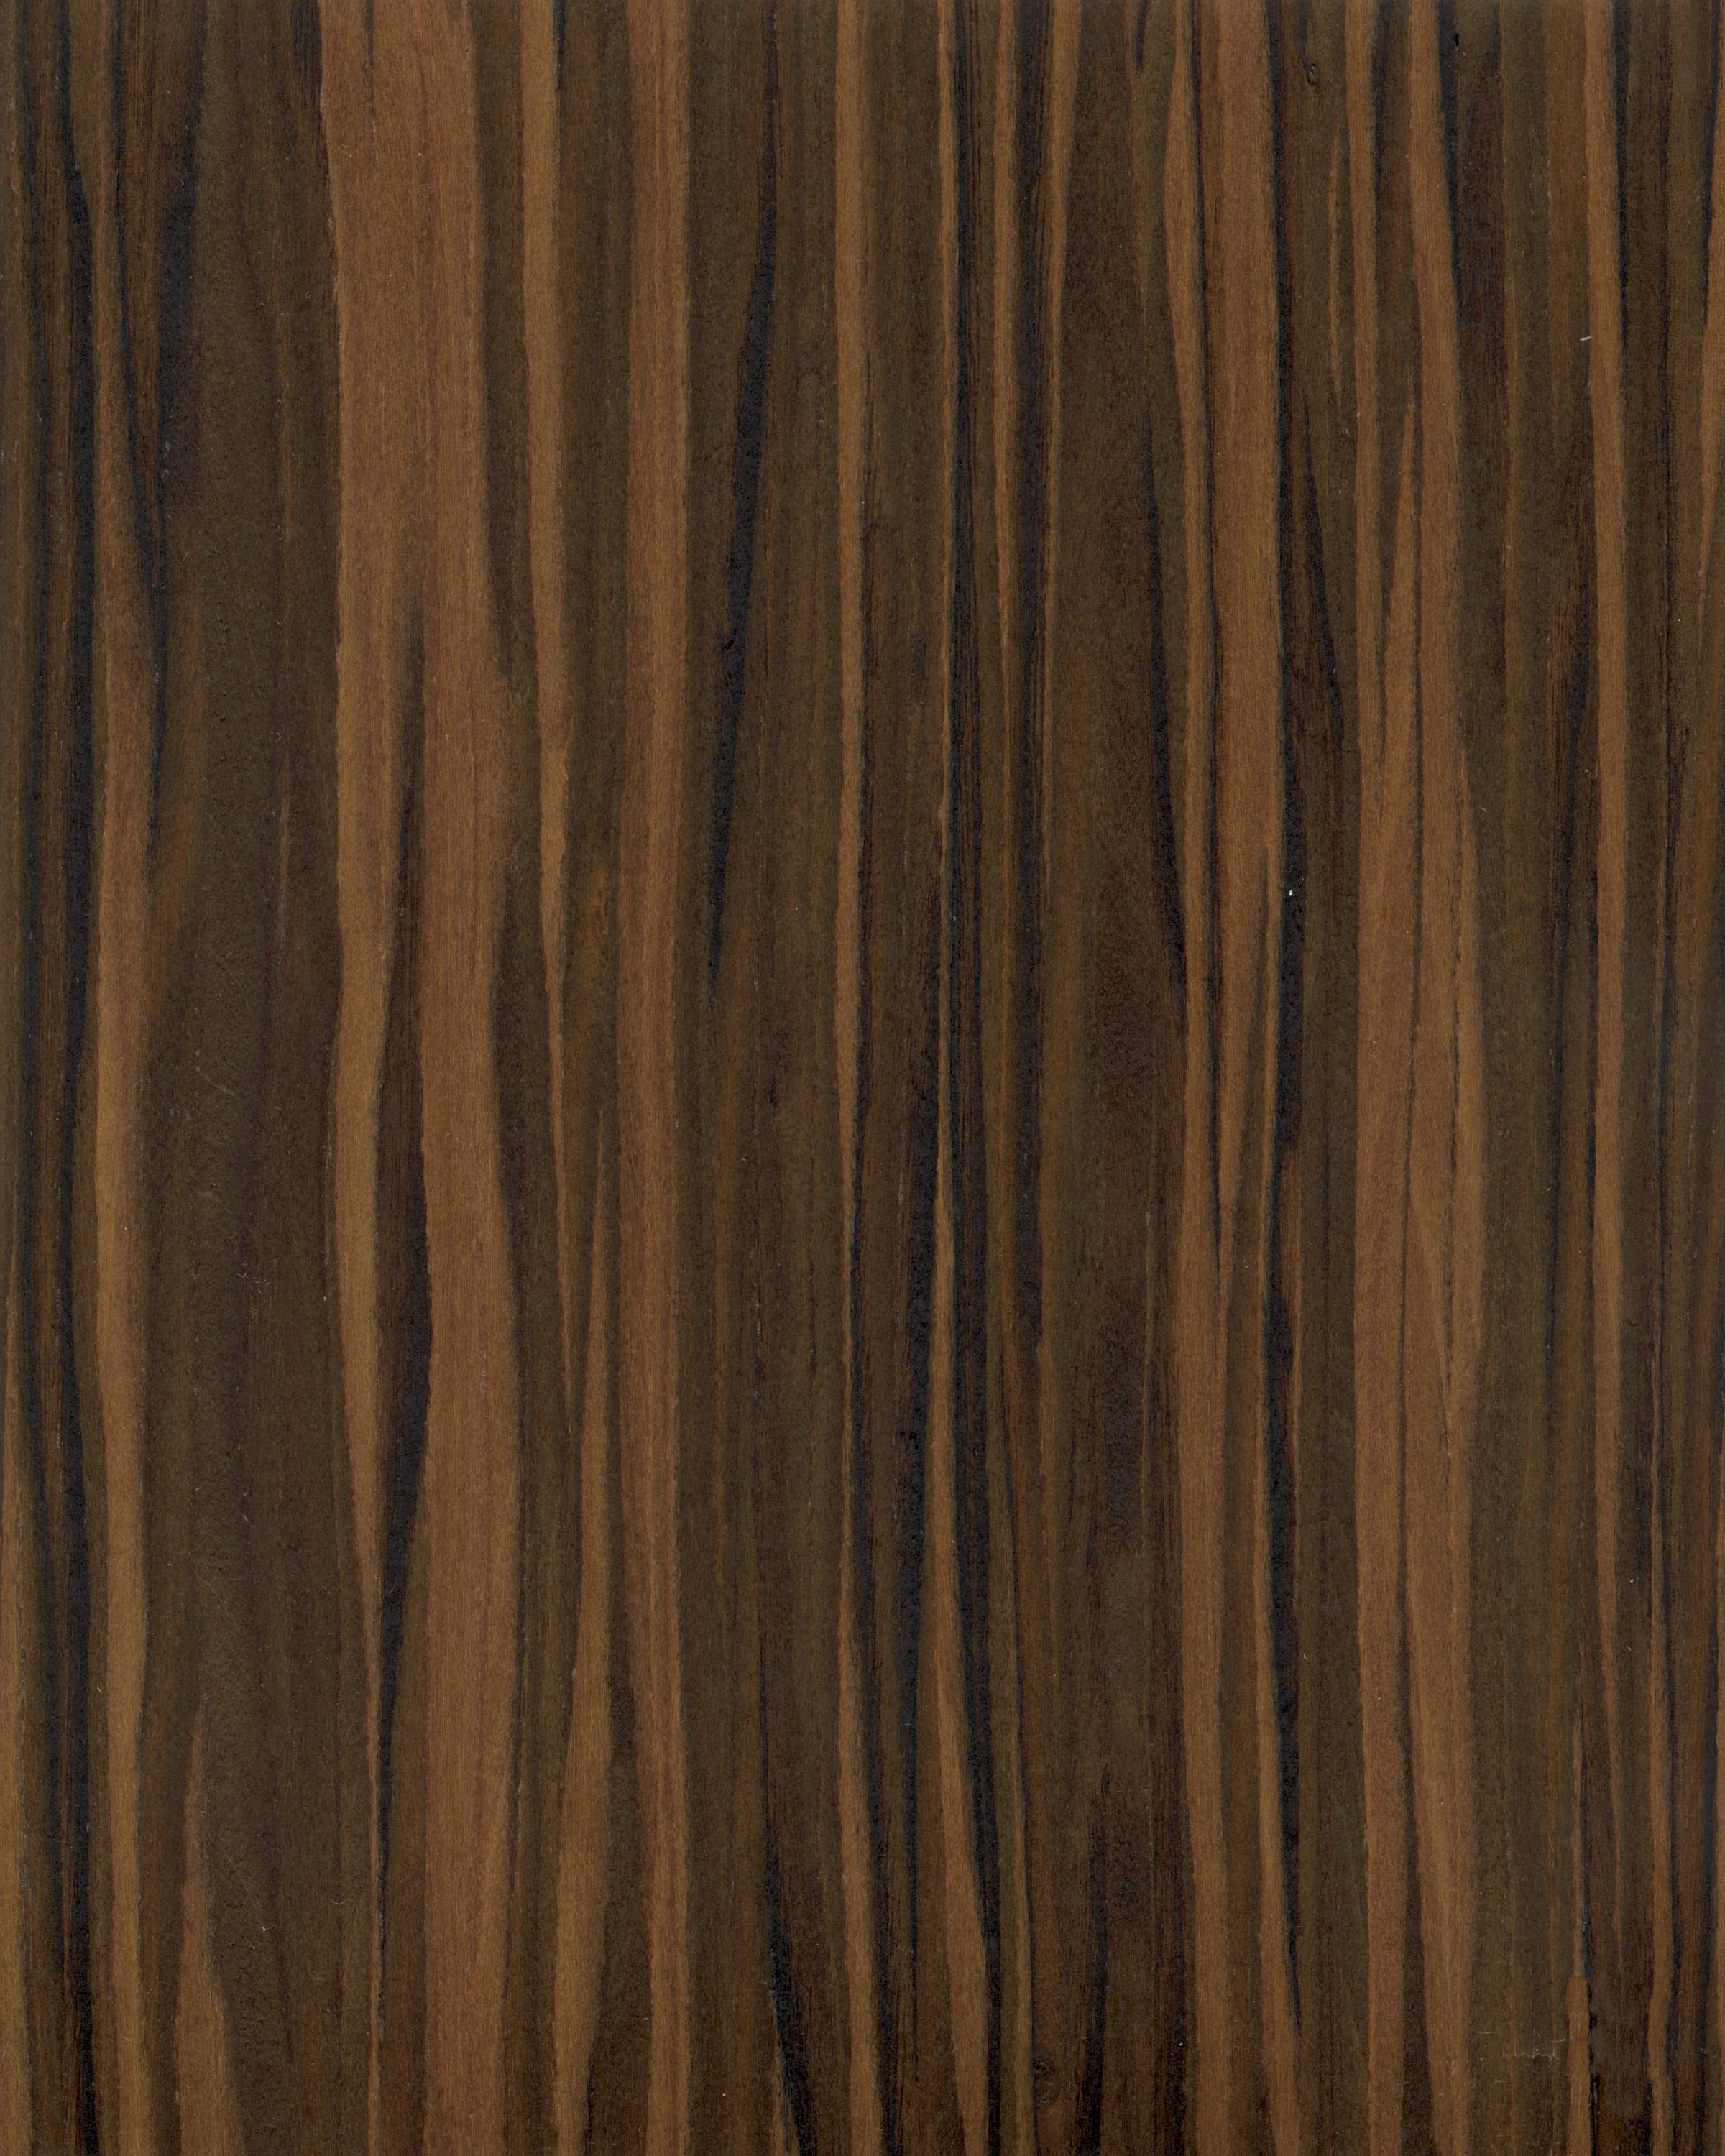 Ebony wood sheet